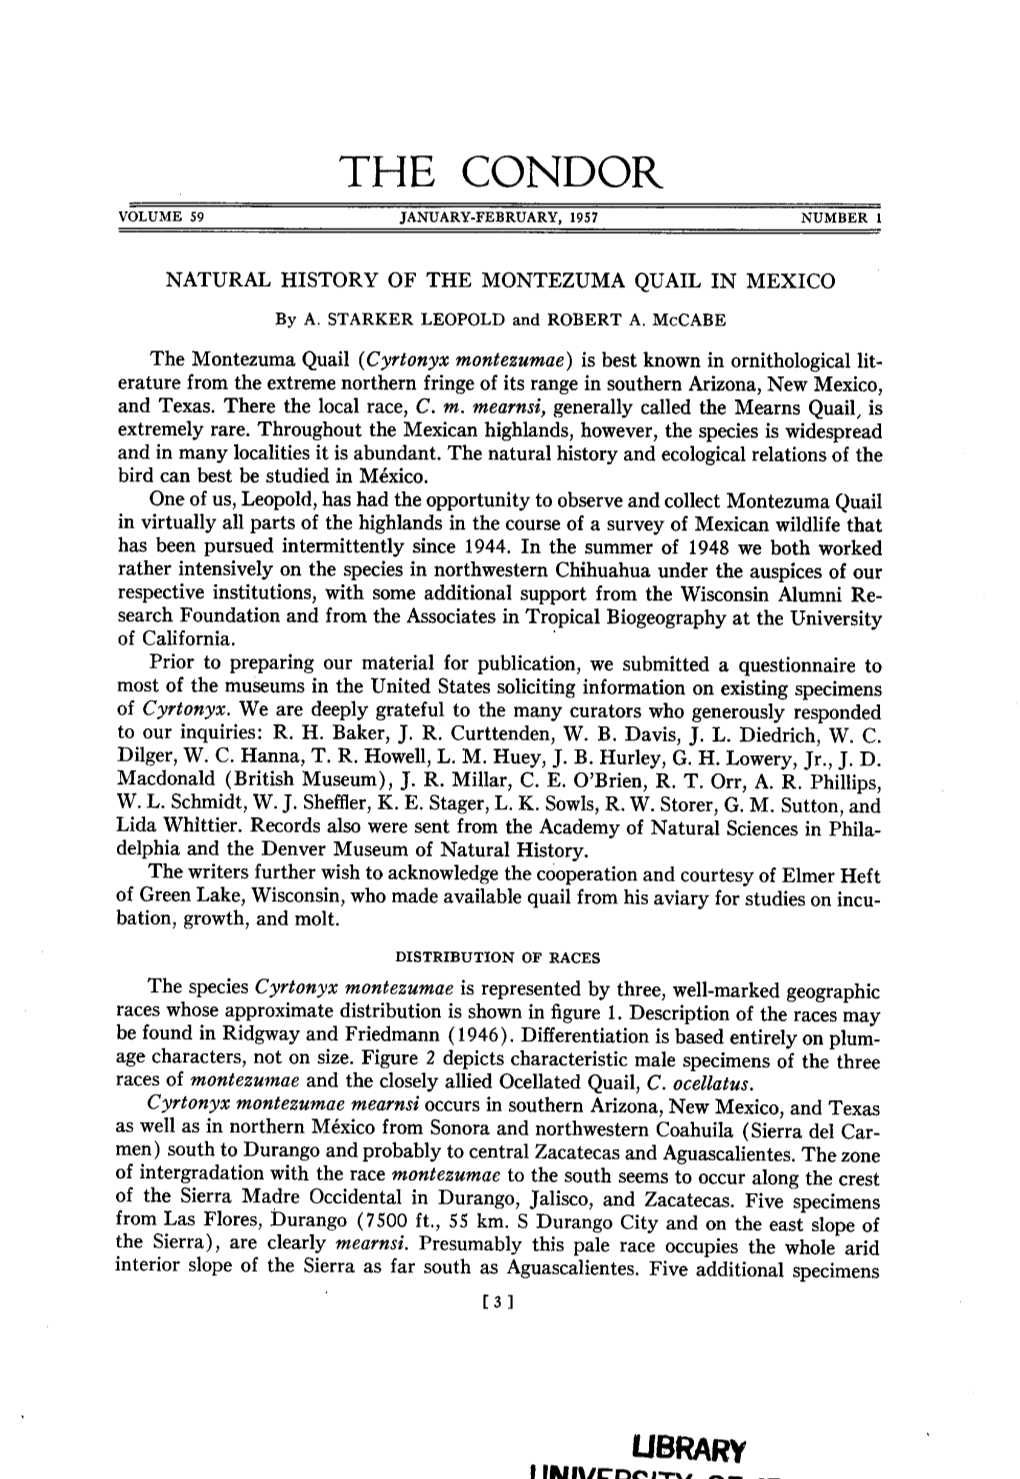 Natural History of the Montezuma Quail in Mexico